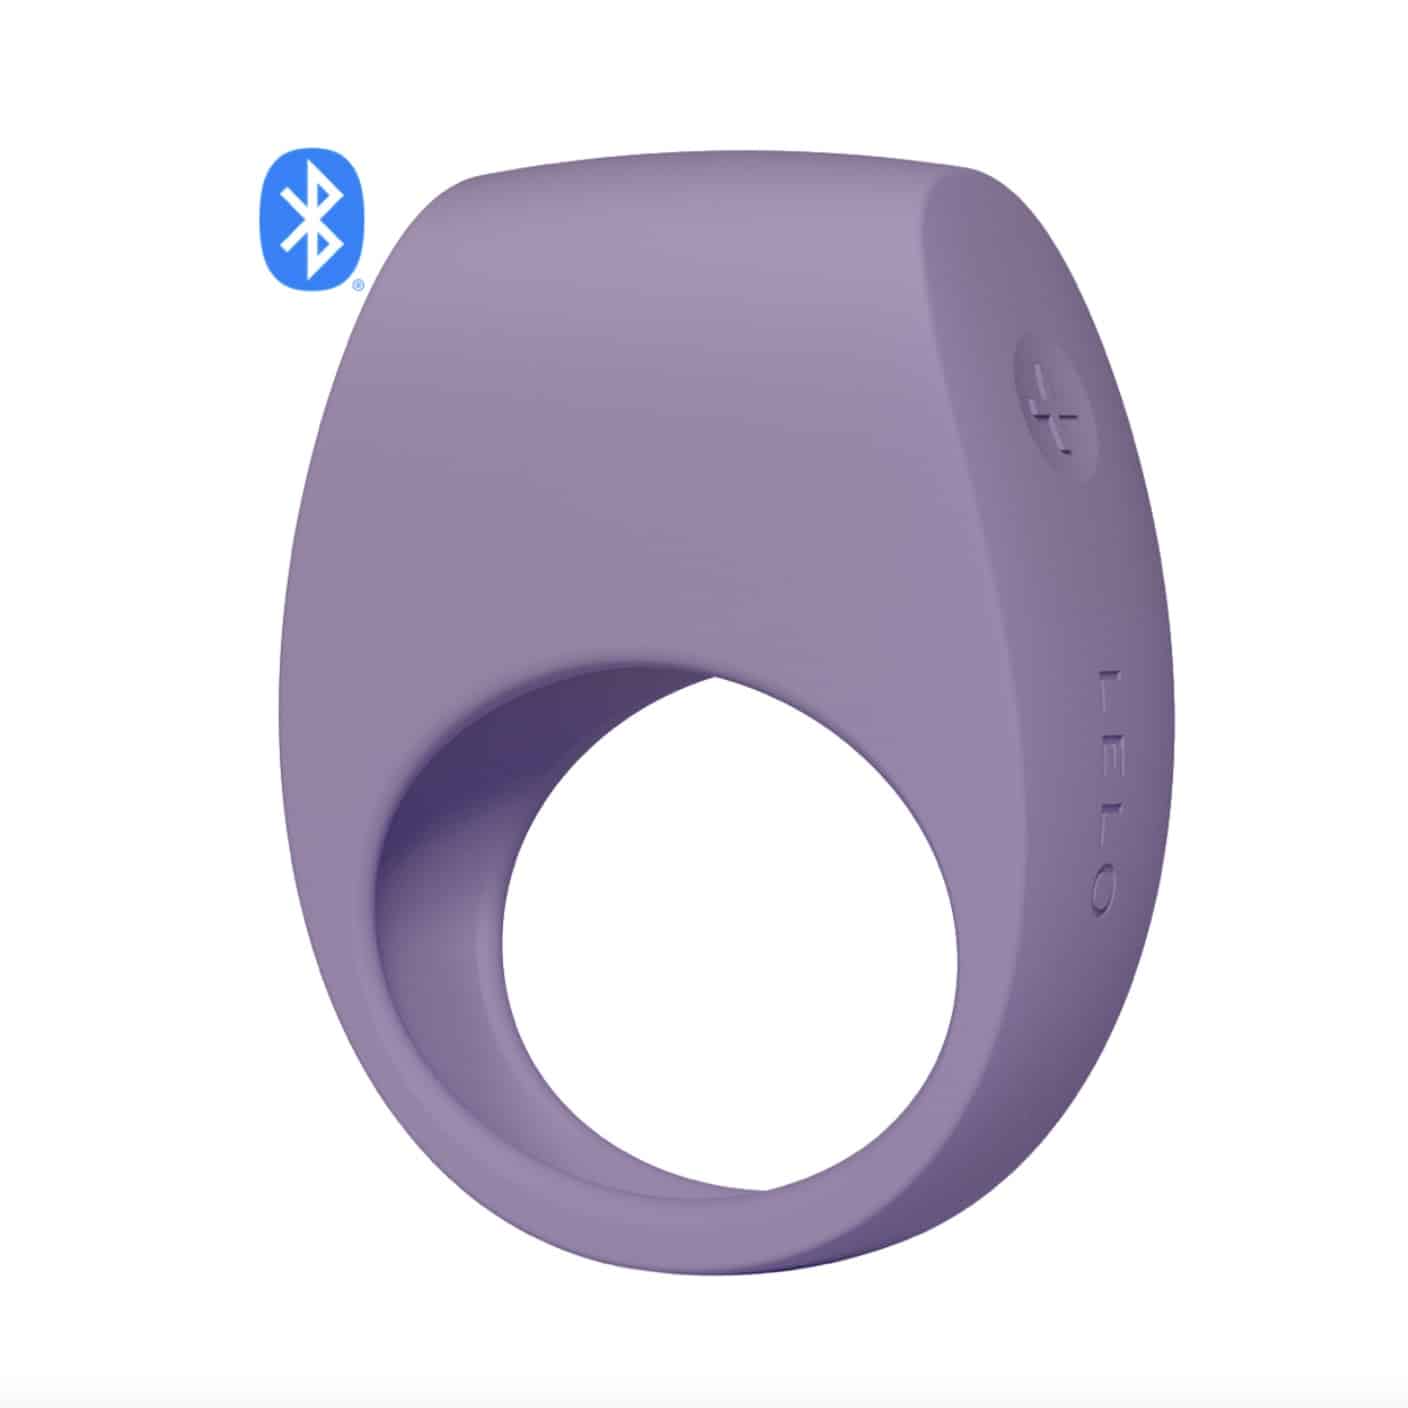 25471-lelo-tor-3-app-controlled-vibrating-penis-ring-purple-love-shop-Cy